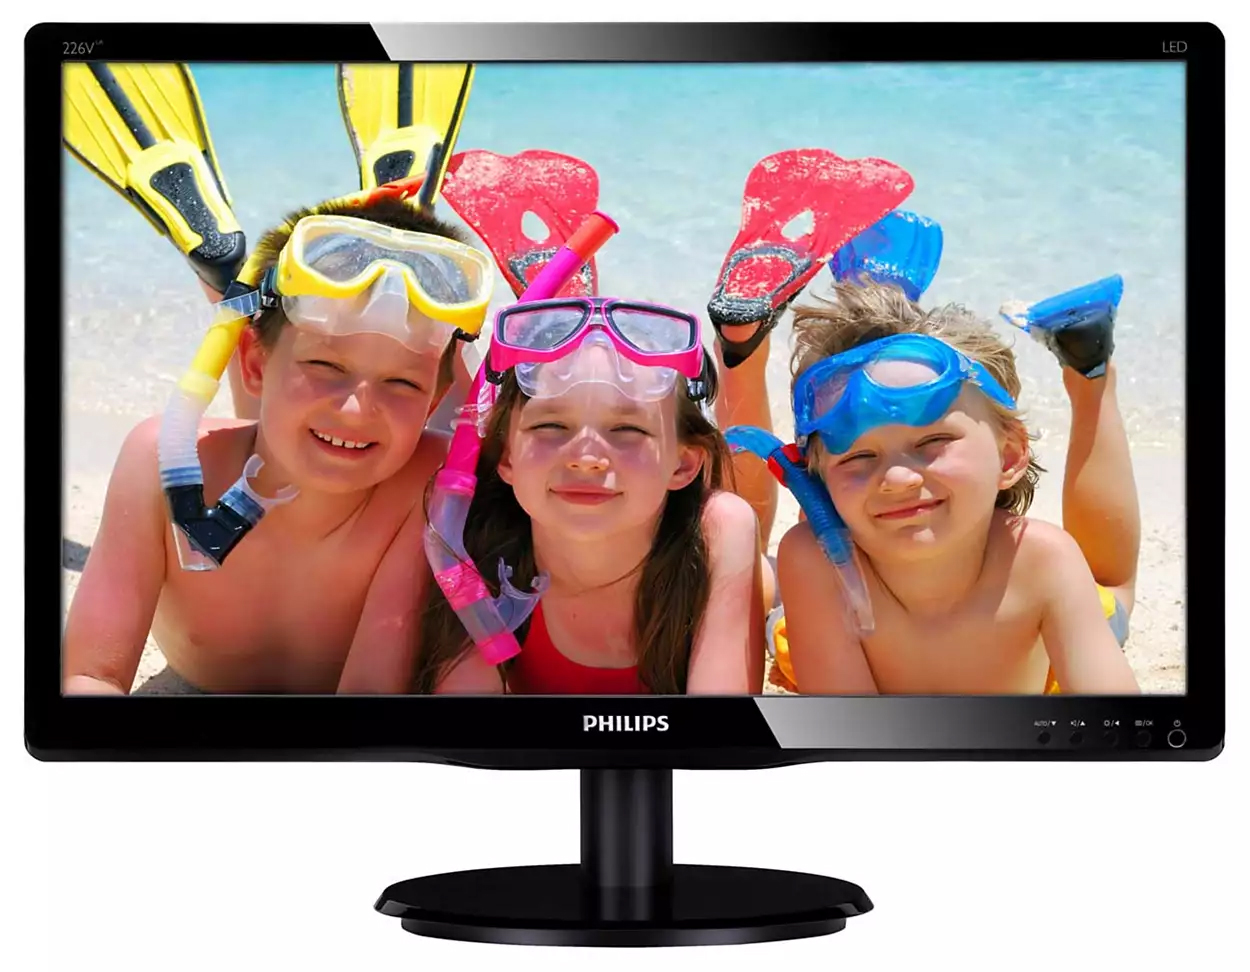 Monitor Refurbished PHILIPS 226V4L, 22 Inch Full HD LCD, VGA, DVI NewTechnology Media